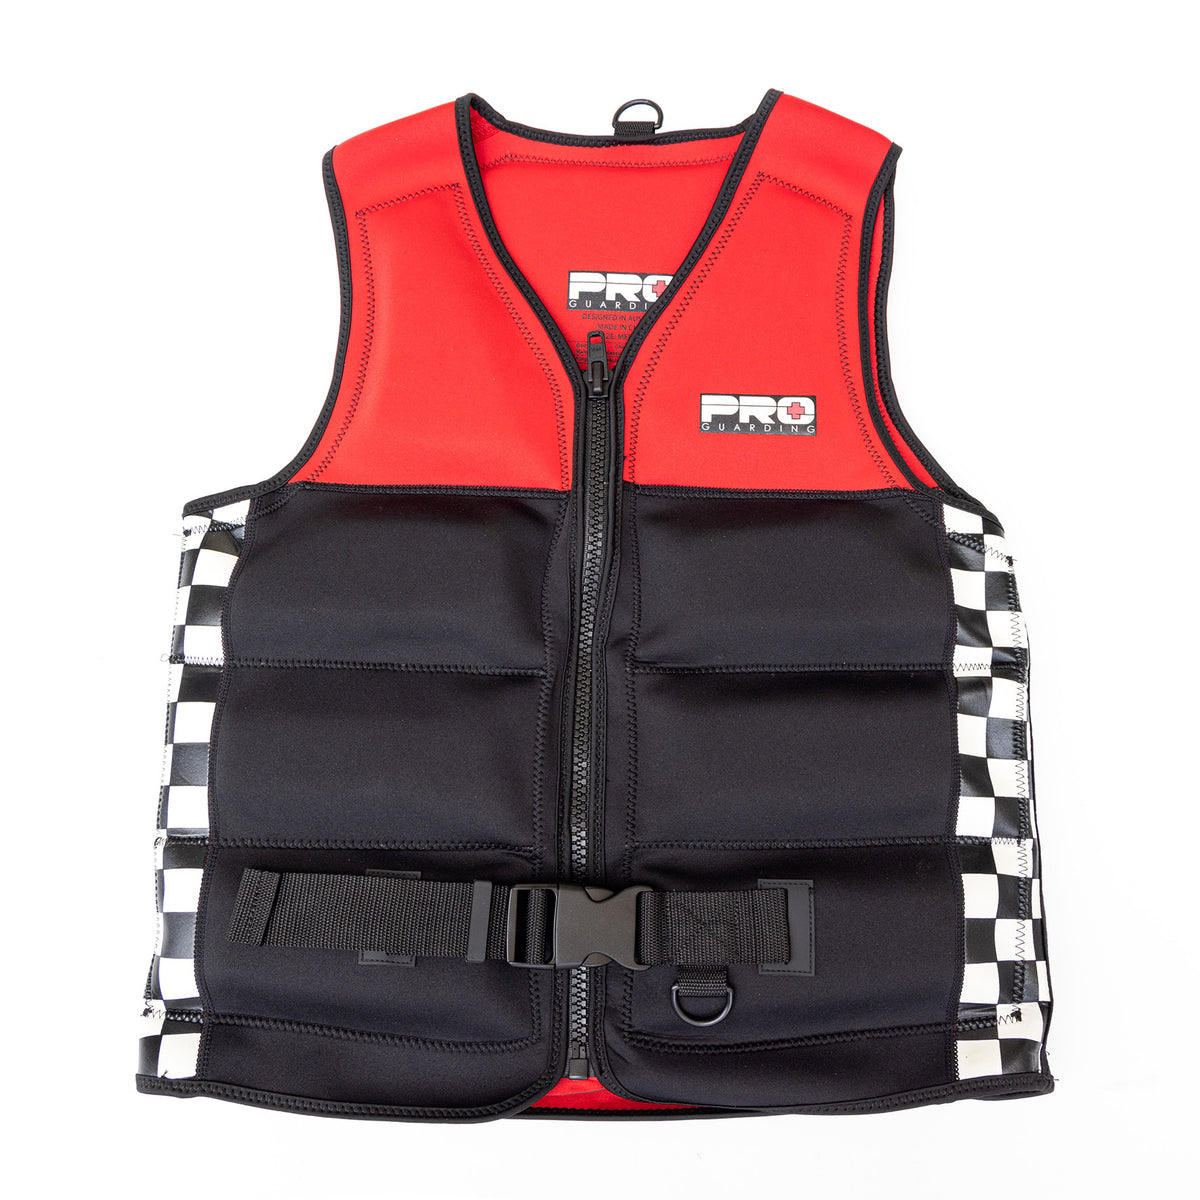 Pro Guarding Jet Ski Life Vest - Black and Red